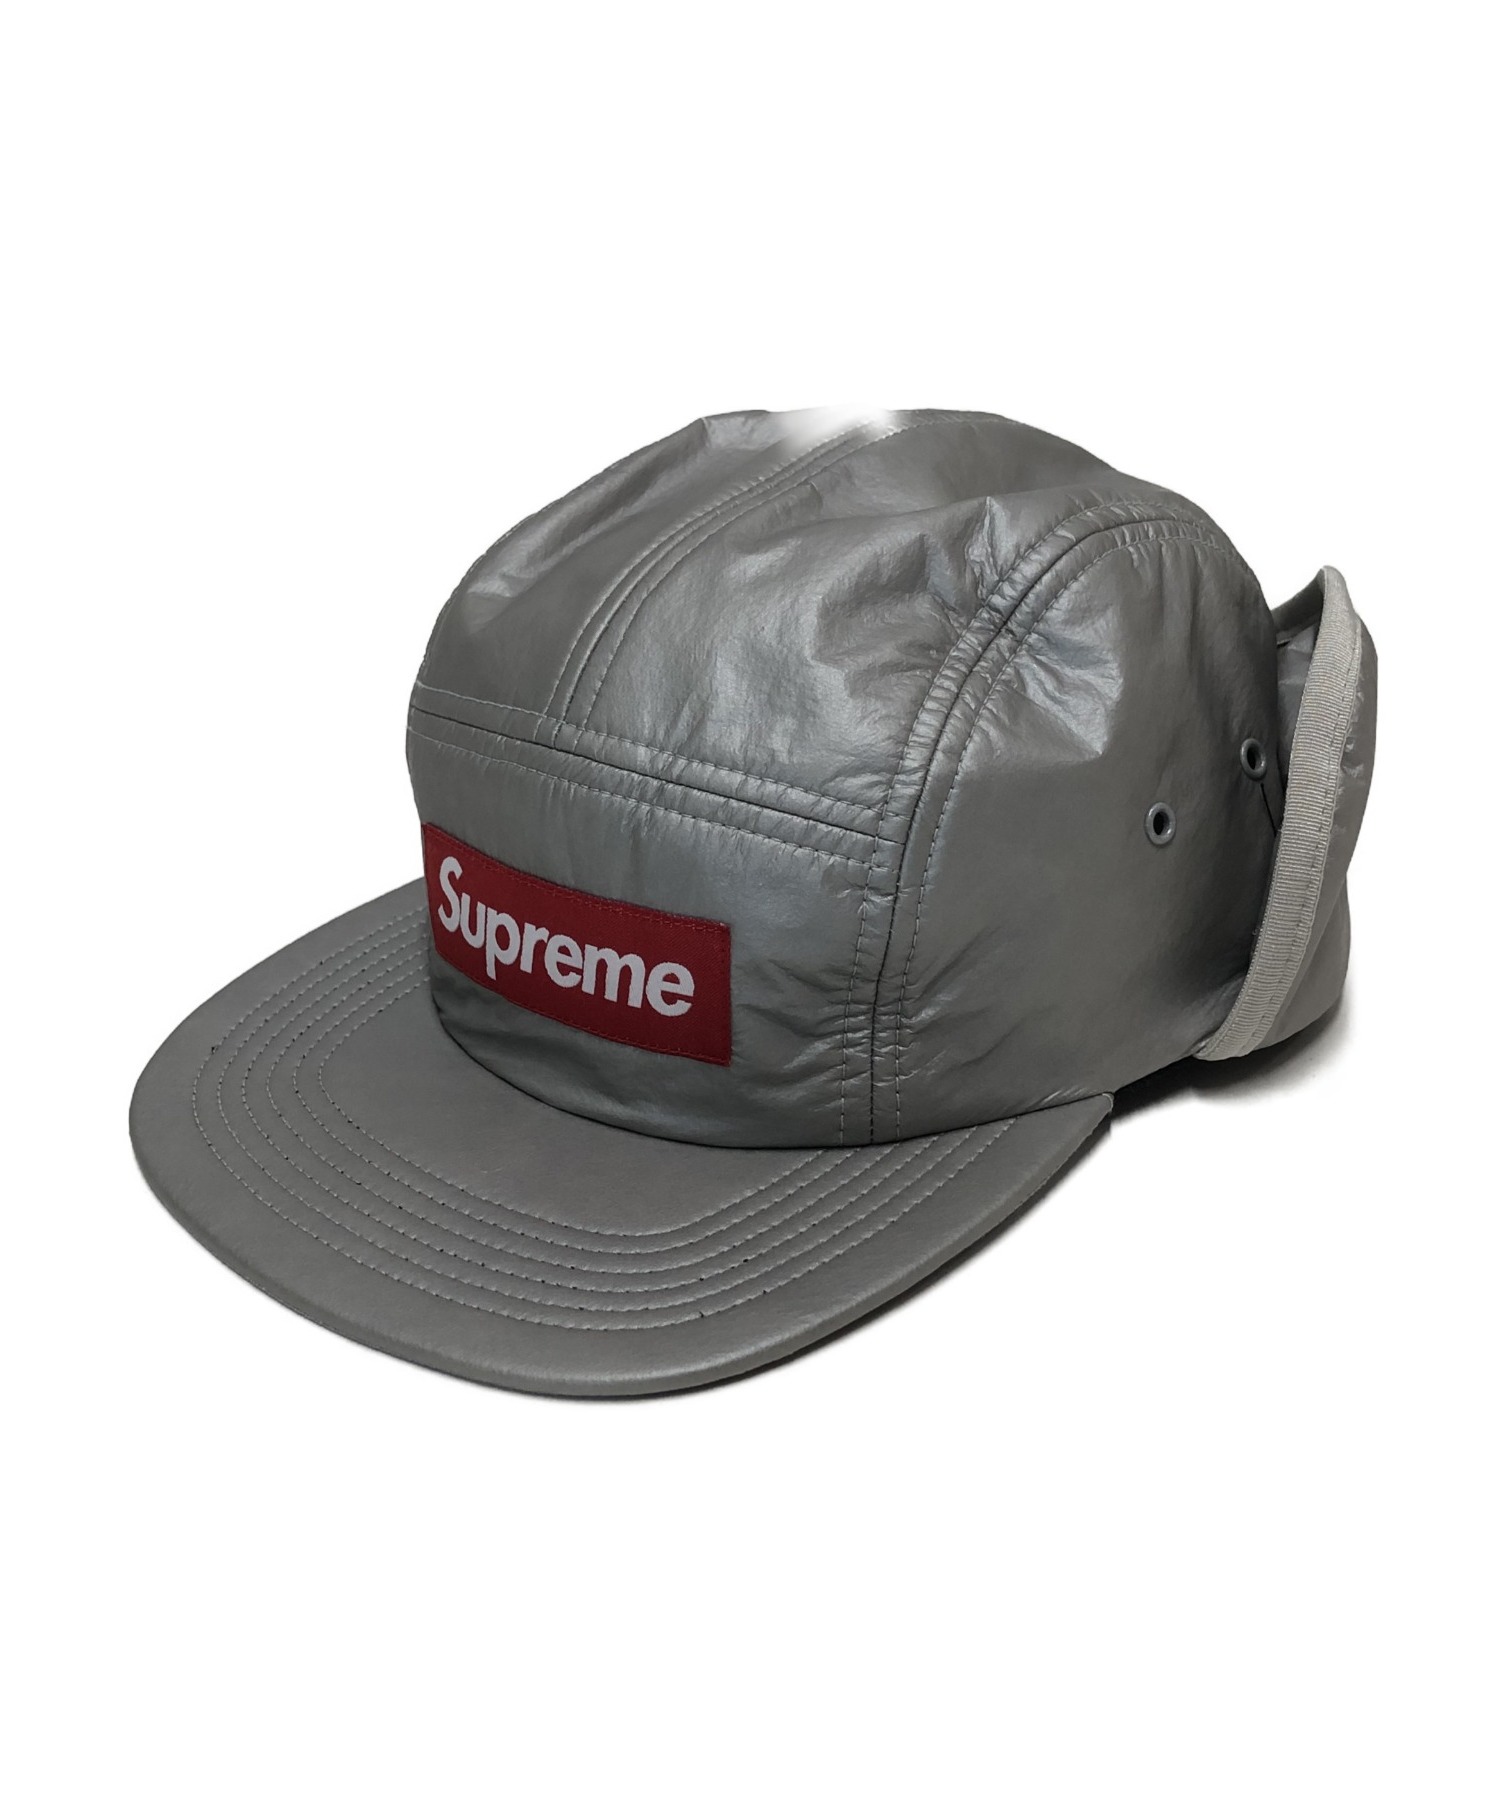 Supreme Hat Hot Sale, UP TO 55% OFF | www.loop-cn.com